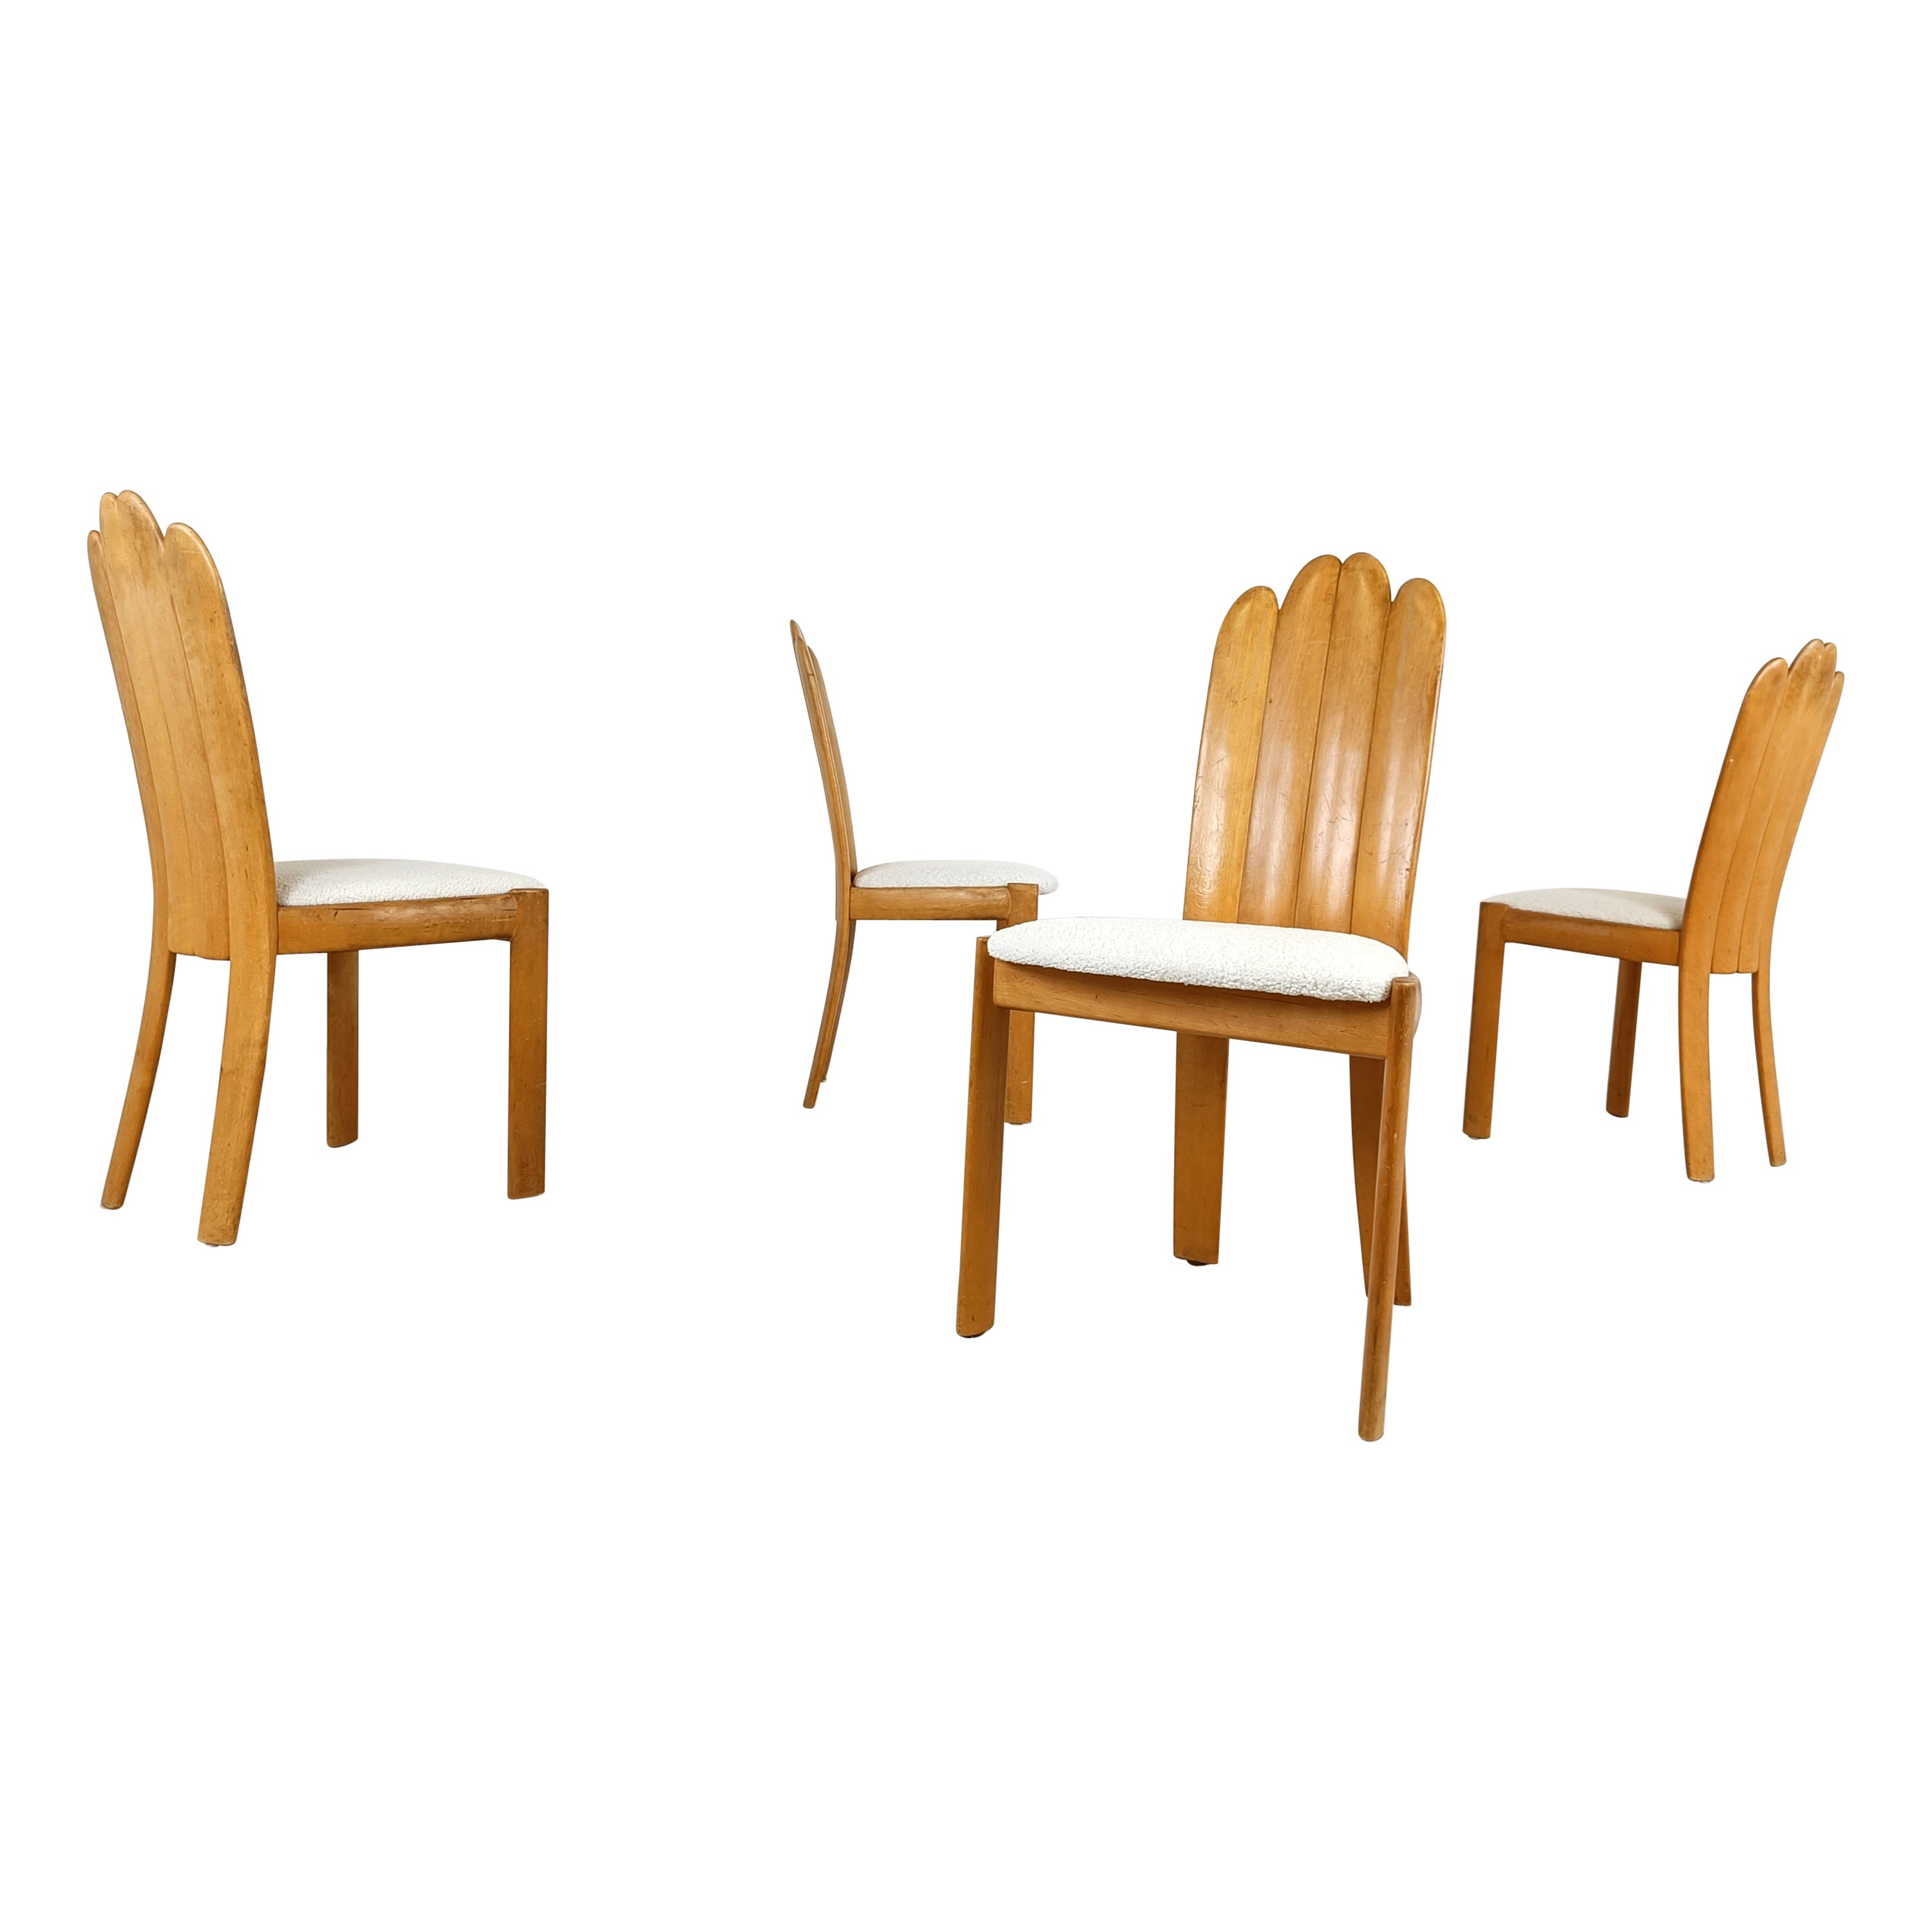 Set of 4 scandinavian dining chairs by Vamdrup Stolefabrik, 1960s